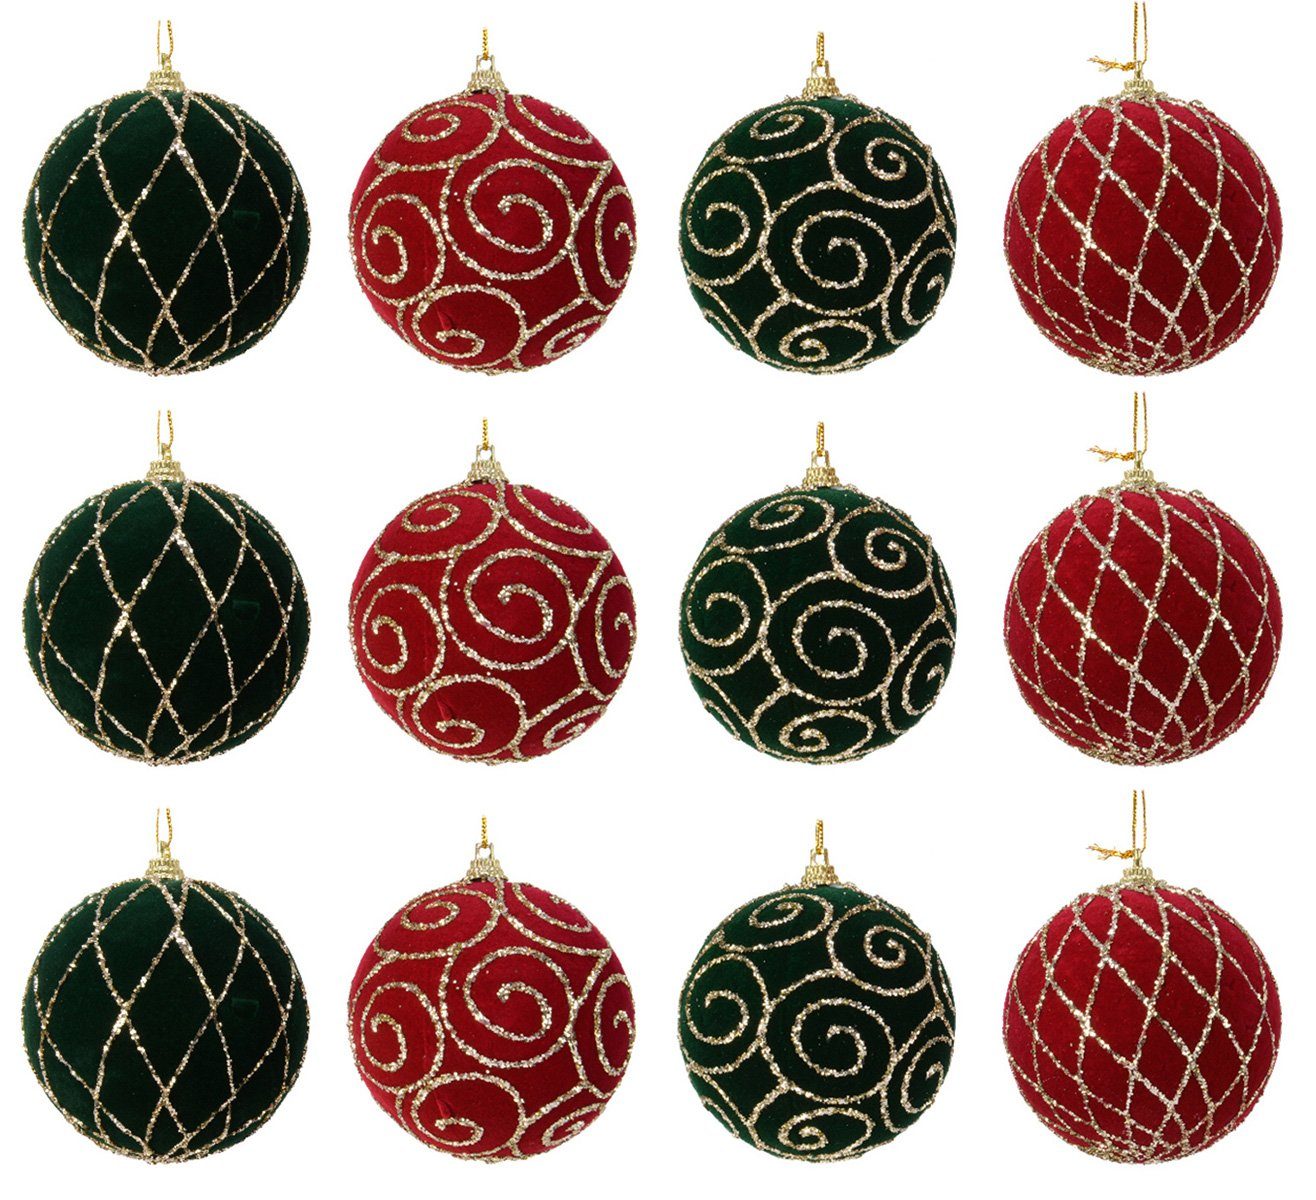 Decoris season decorations Weihnachtsbaumkugel, Weihnachtskugeln Kunststoff 8cm Ornamente 12er Set - Dunkelgrün / Rot